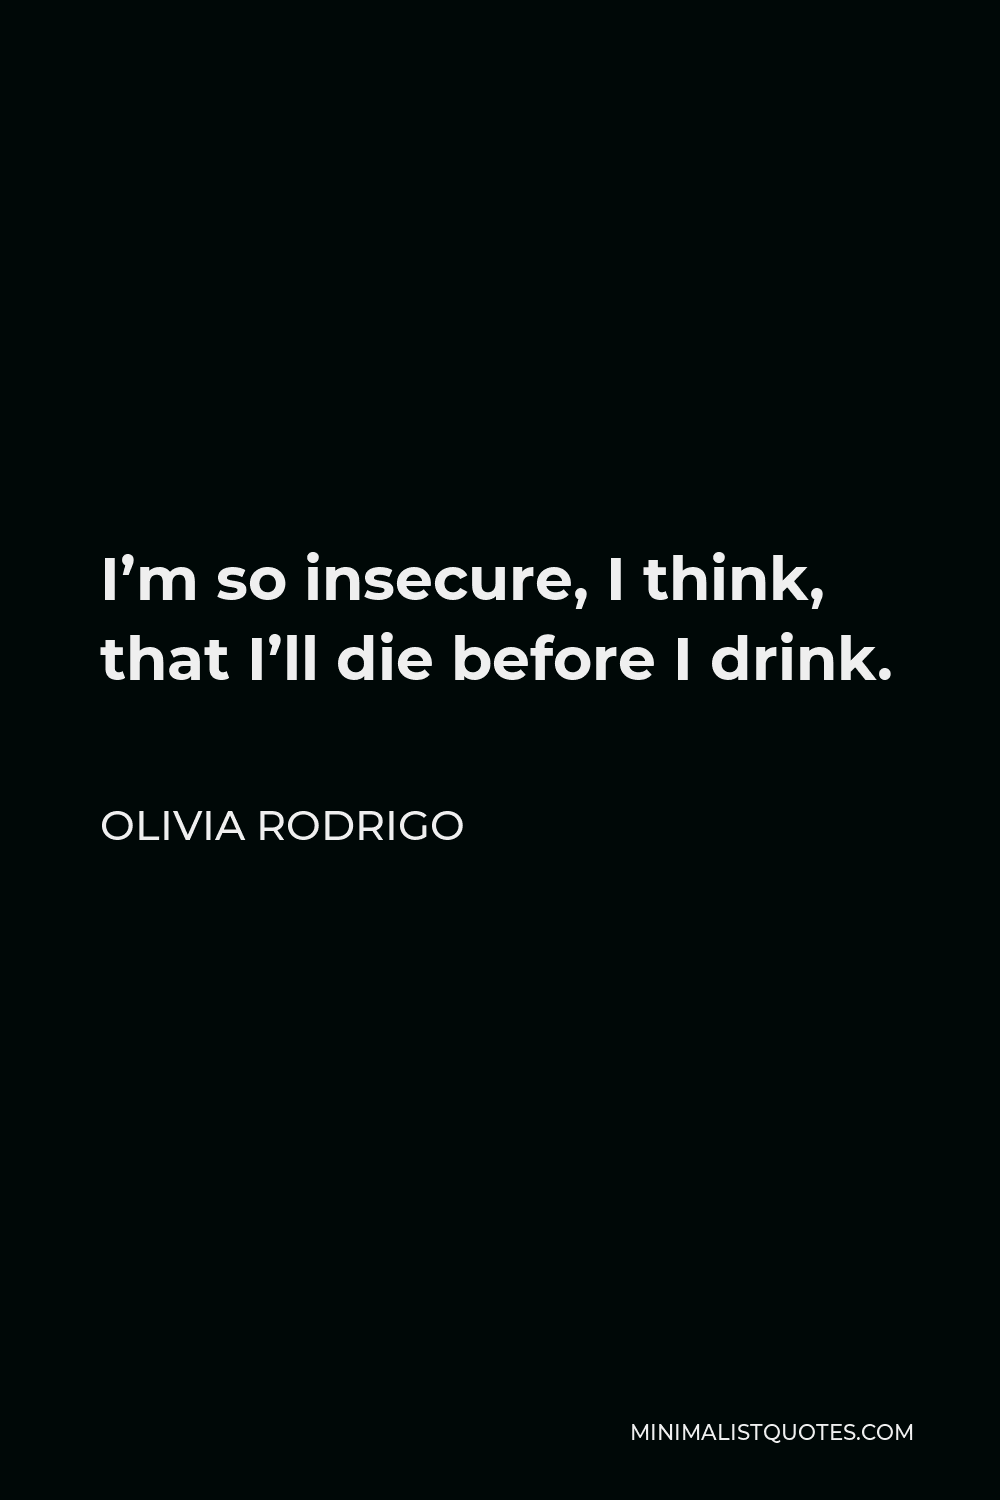 Olivia Rodrigo Quote - I’m so insecure, I think, that I’ll die before I drink.